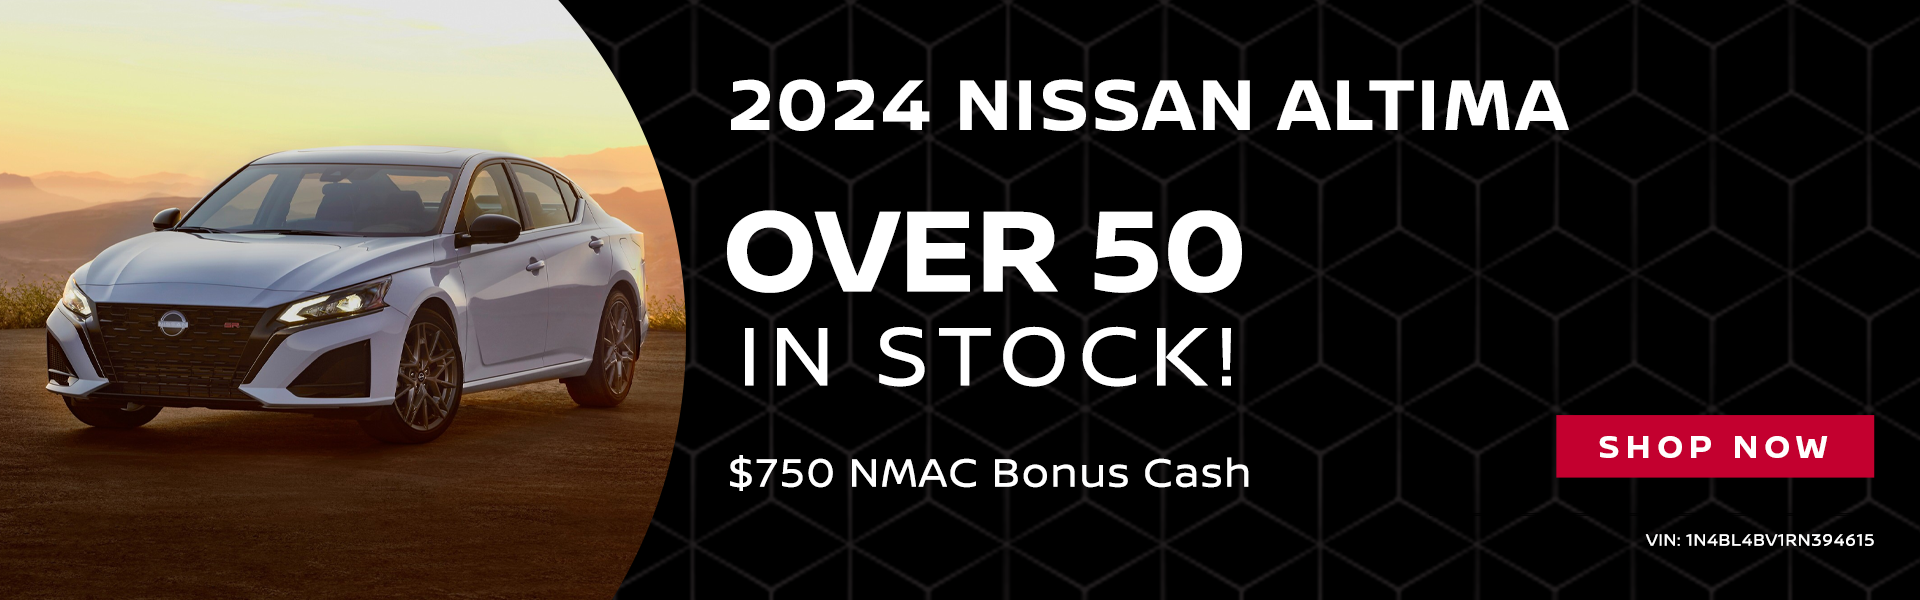 2024 Nissan Altima: Over 50 In Stock! + $750 NMAC Bonus Cash